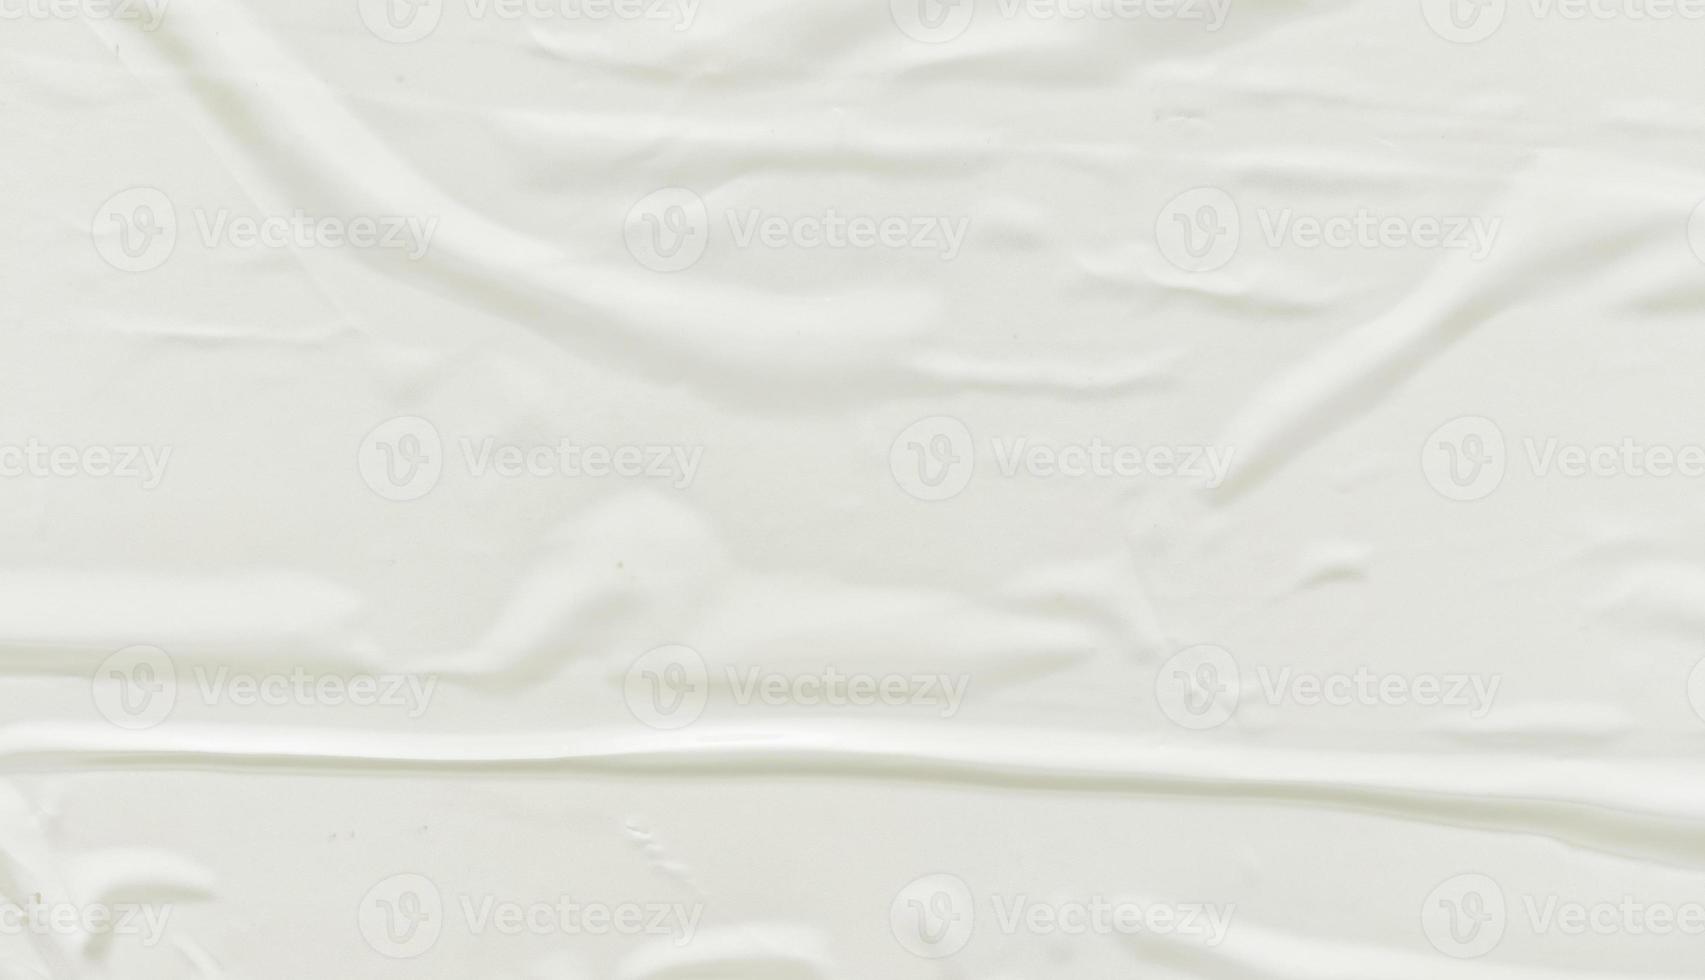 sfondo di texture di carta stropicciata per vari scopi. texture di carta bianca rugosa foto